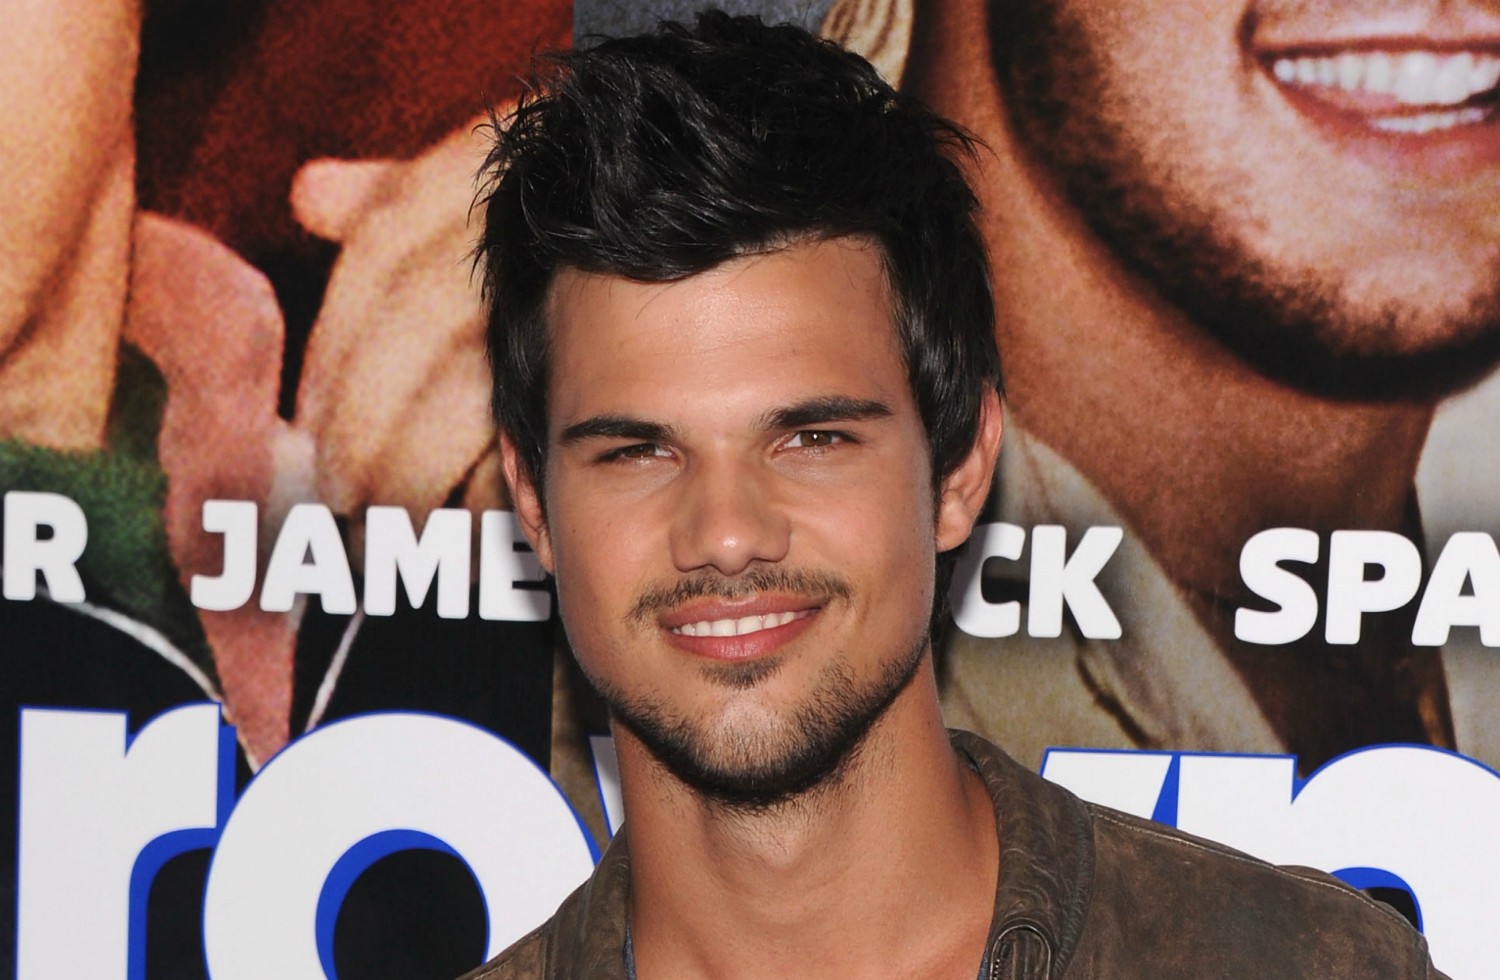 Taylor Lautner, de 22 anos: 40 milhões de dólares (cerca de 90 milhões de reais). (Foto: Getty Images)